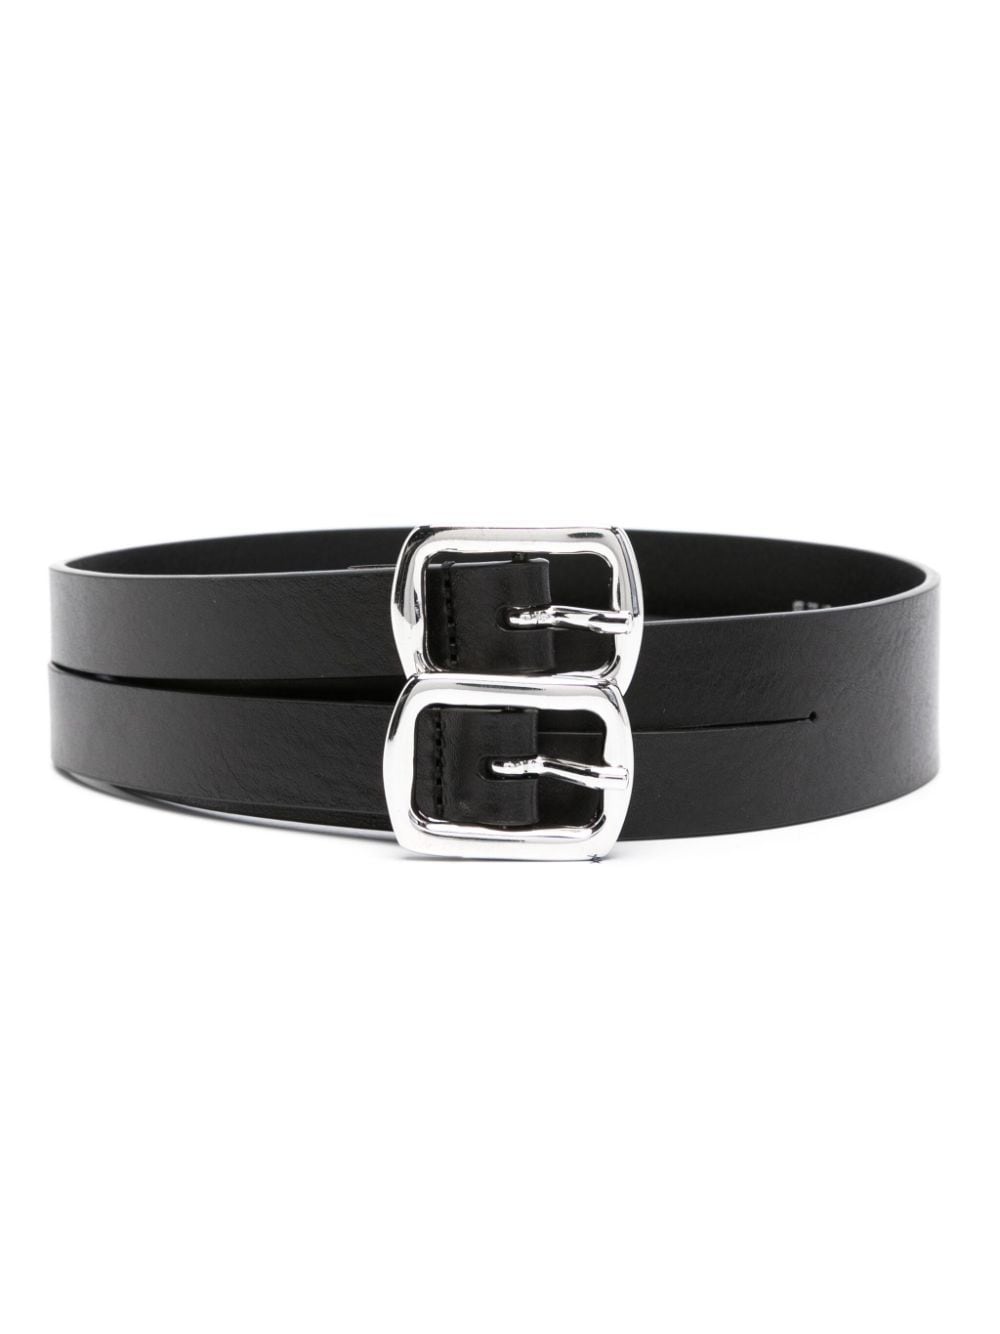 double-buckle leather belt - 1